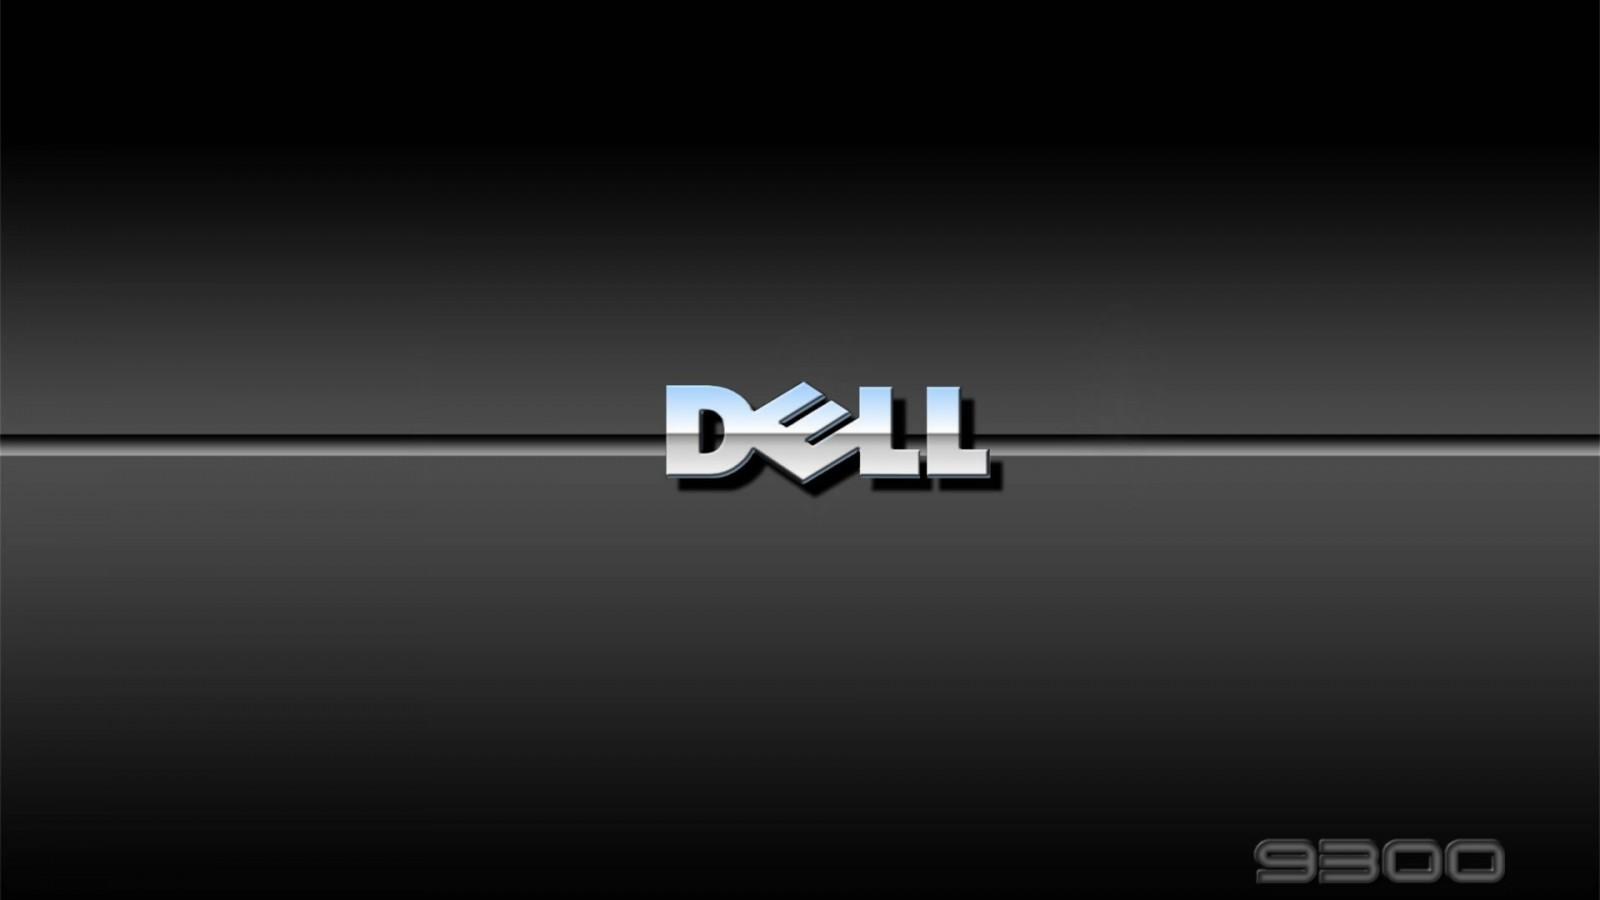 Red Dell Logo - HD Dell Background & Dell Wallpaper Image For Windows